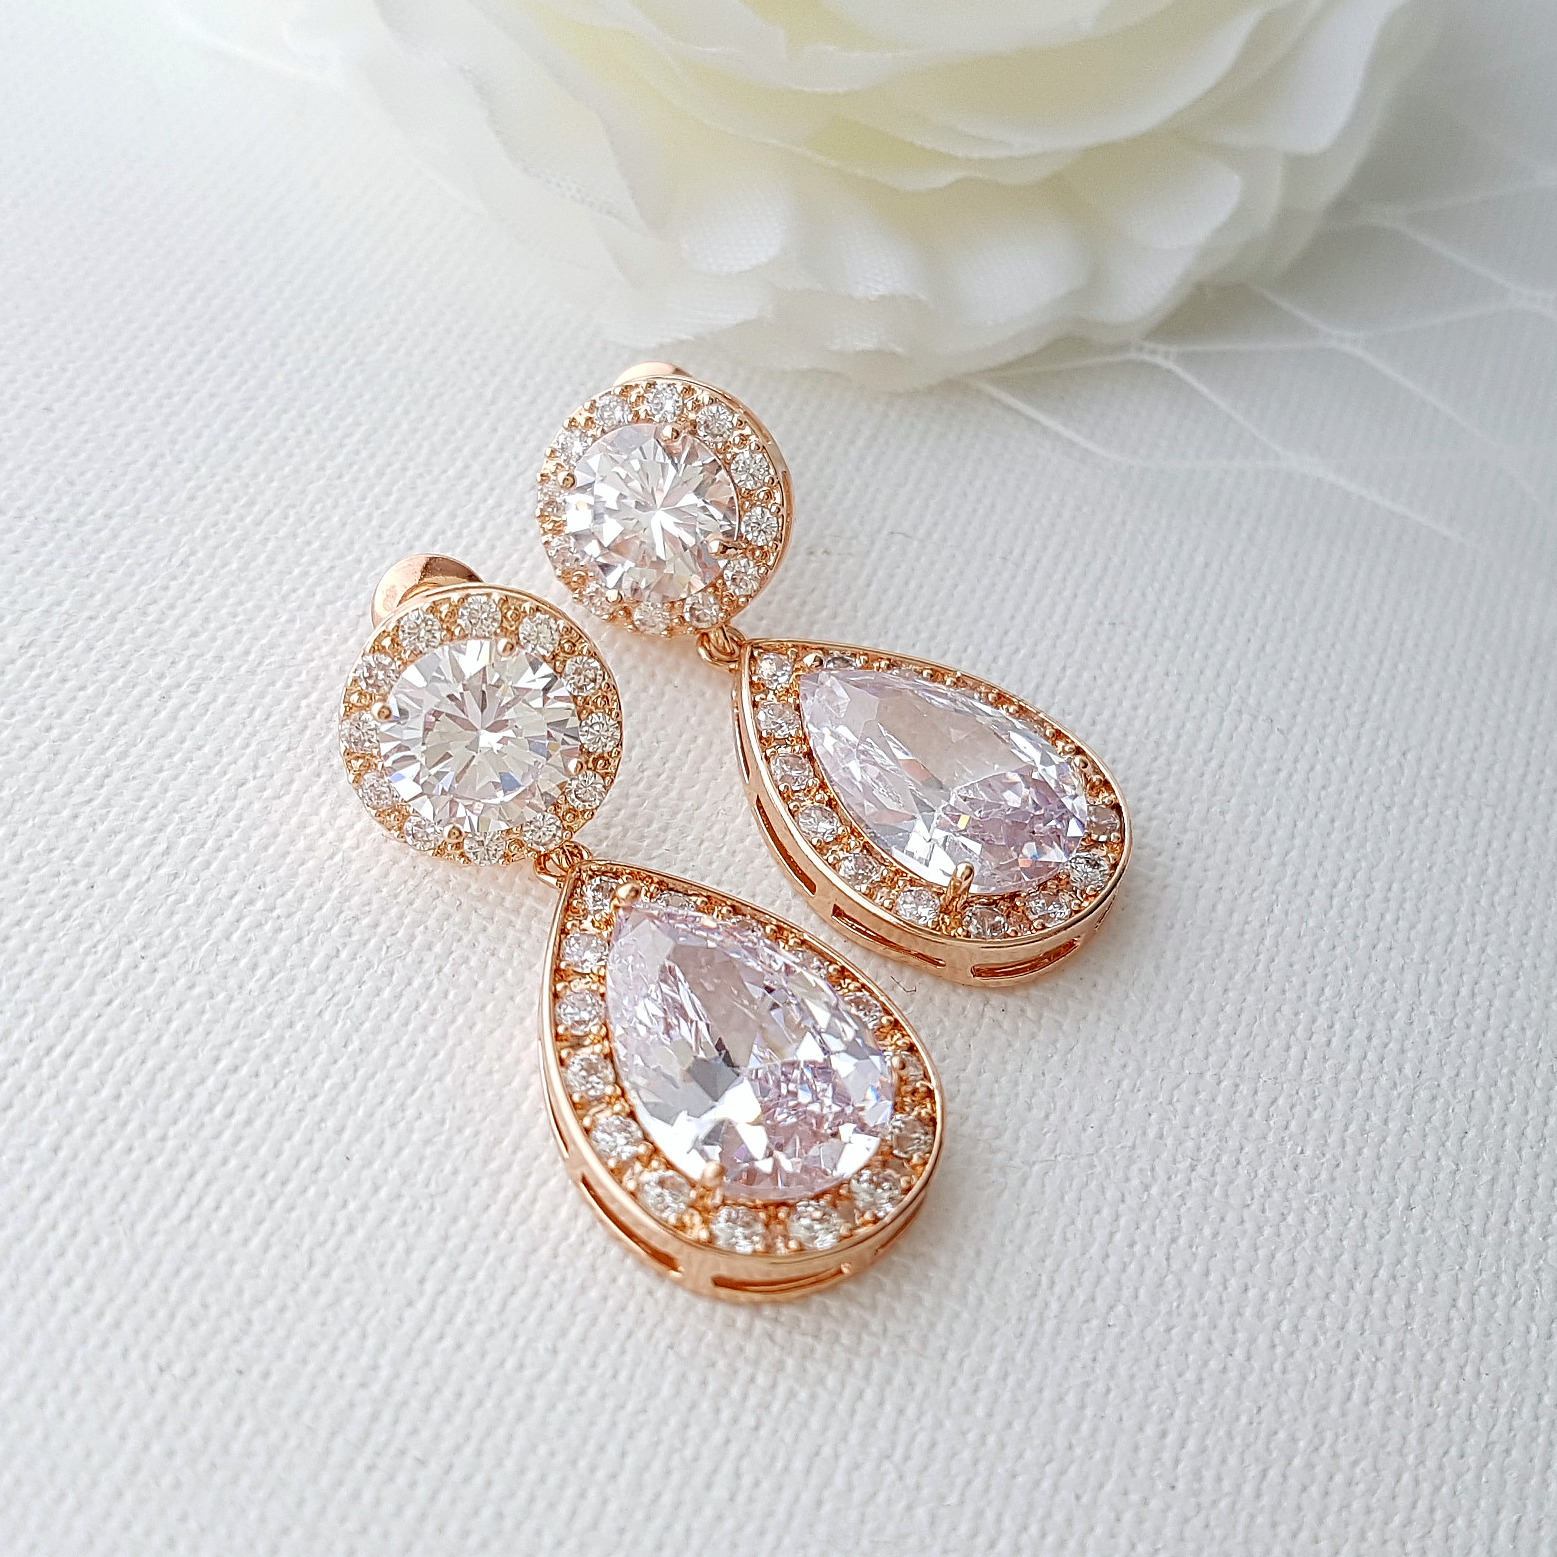 Wedding earrings in rose gold